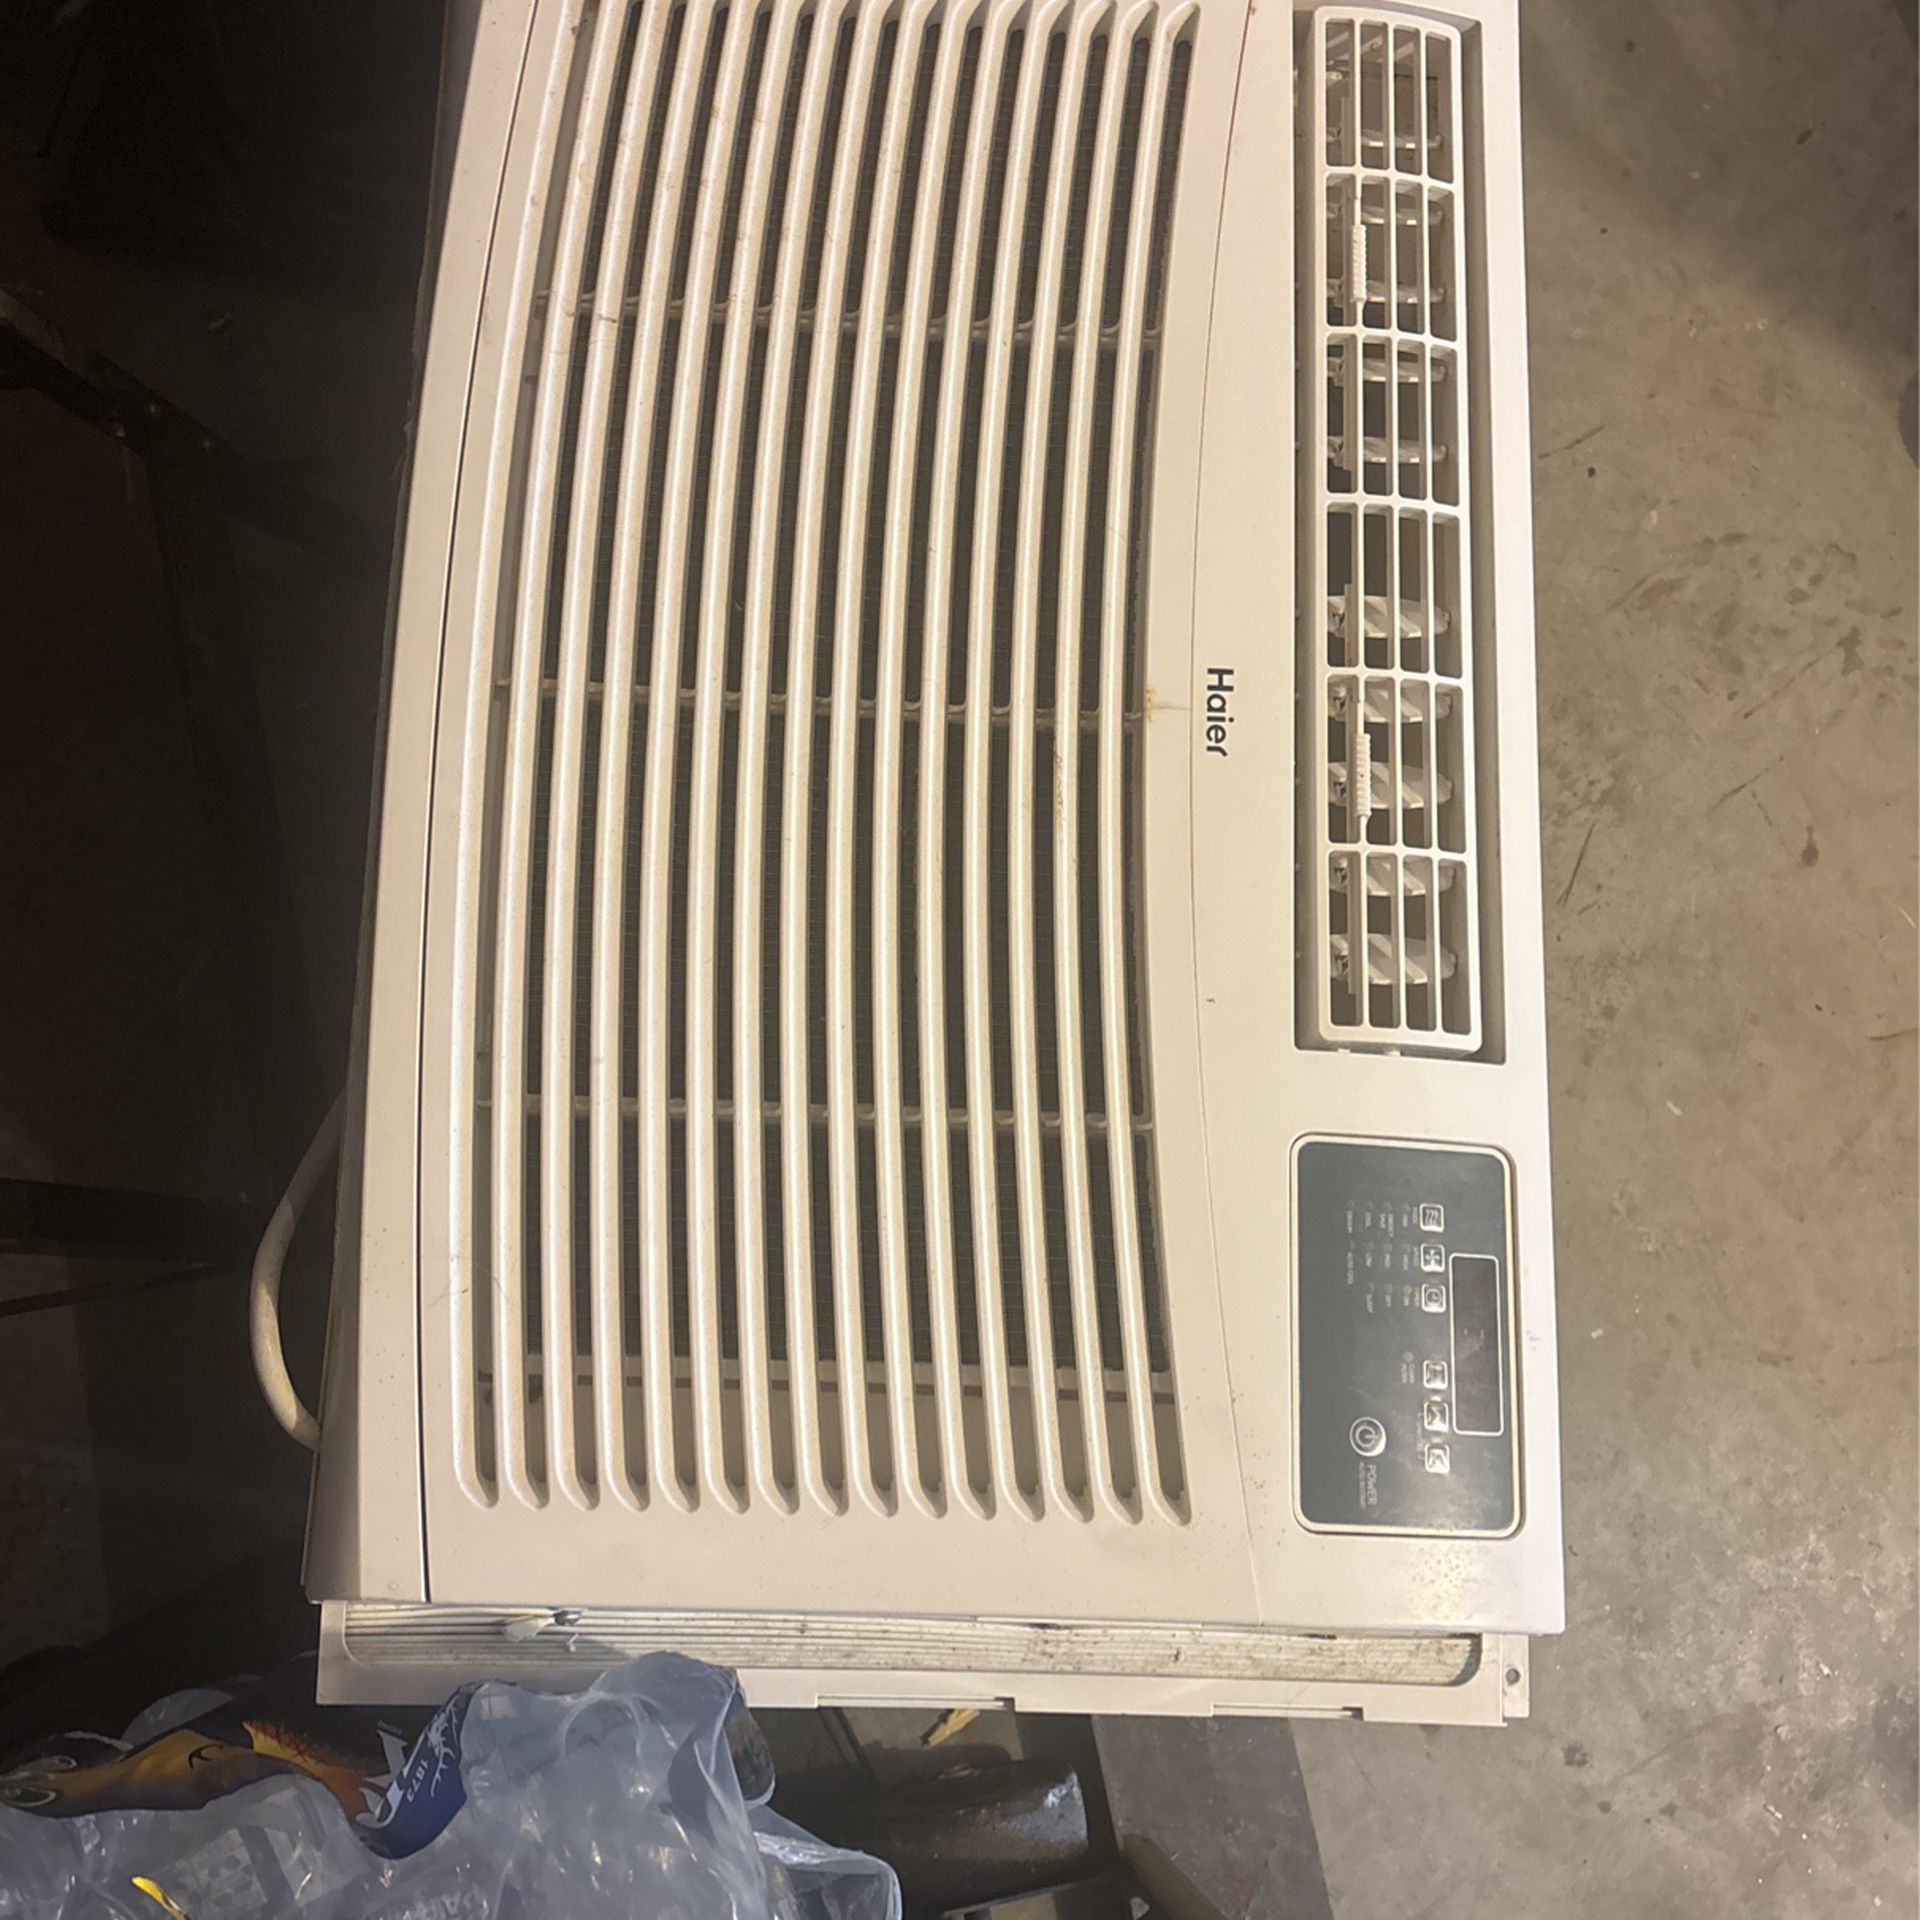 Haier 15,000 BTU Air Conditioner  $150